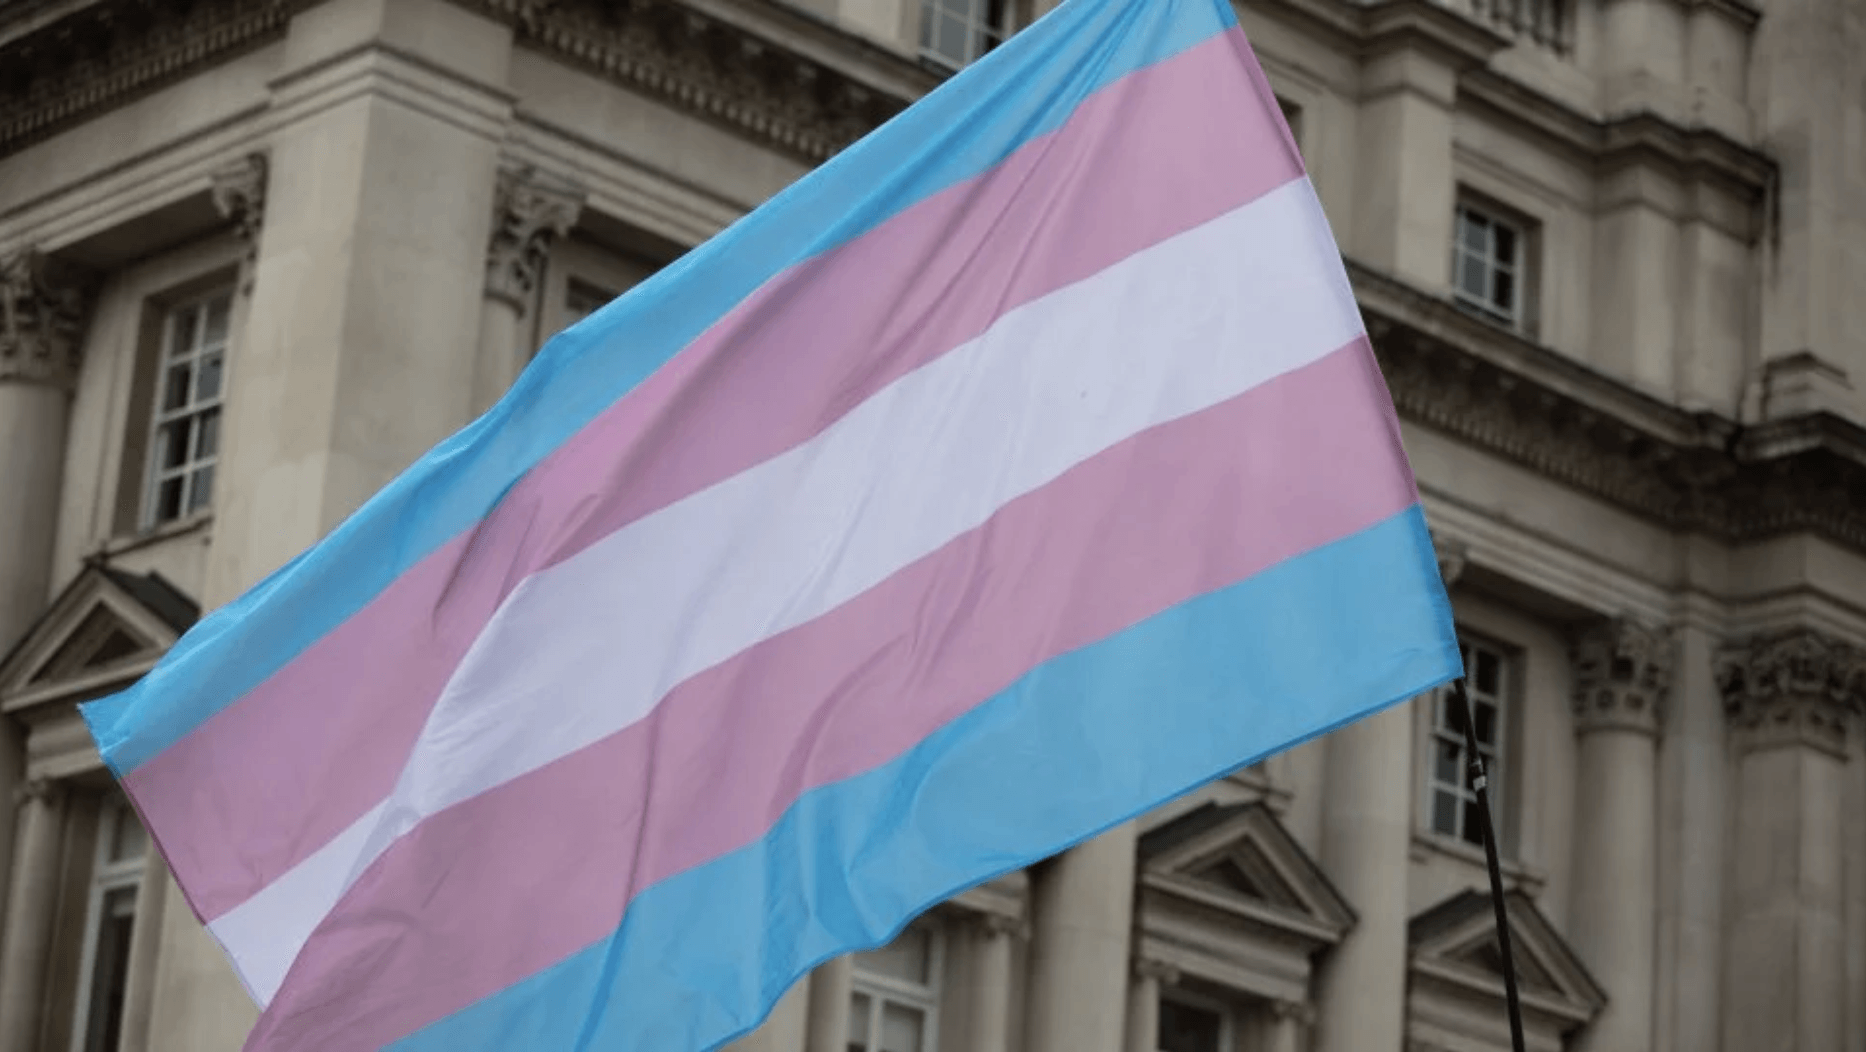 Photograph of the Transgender flag